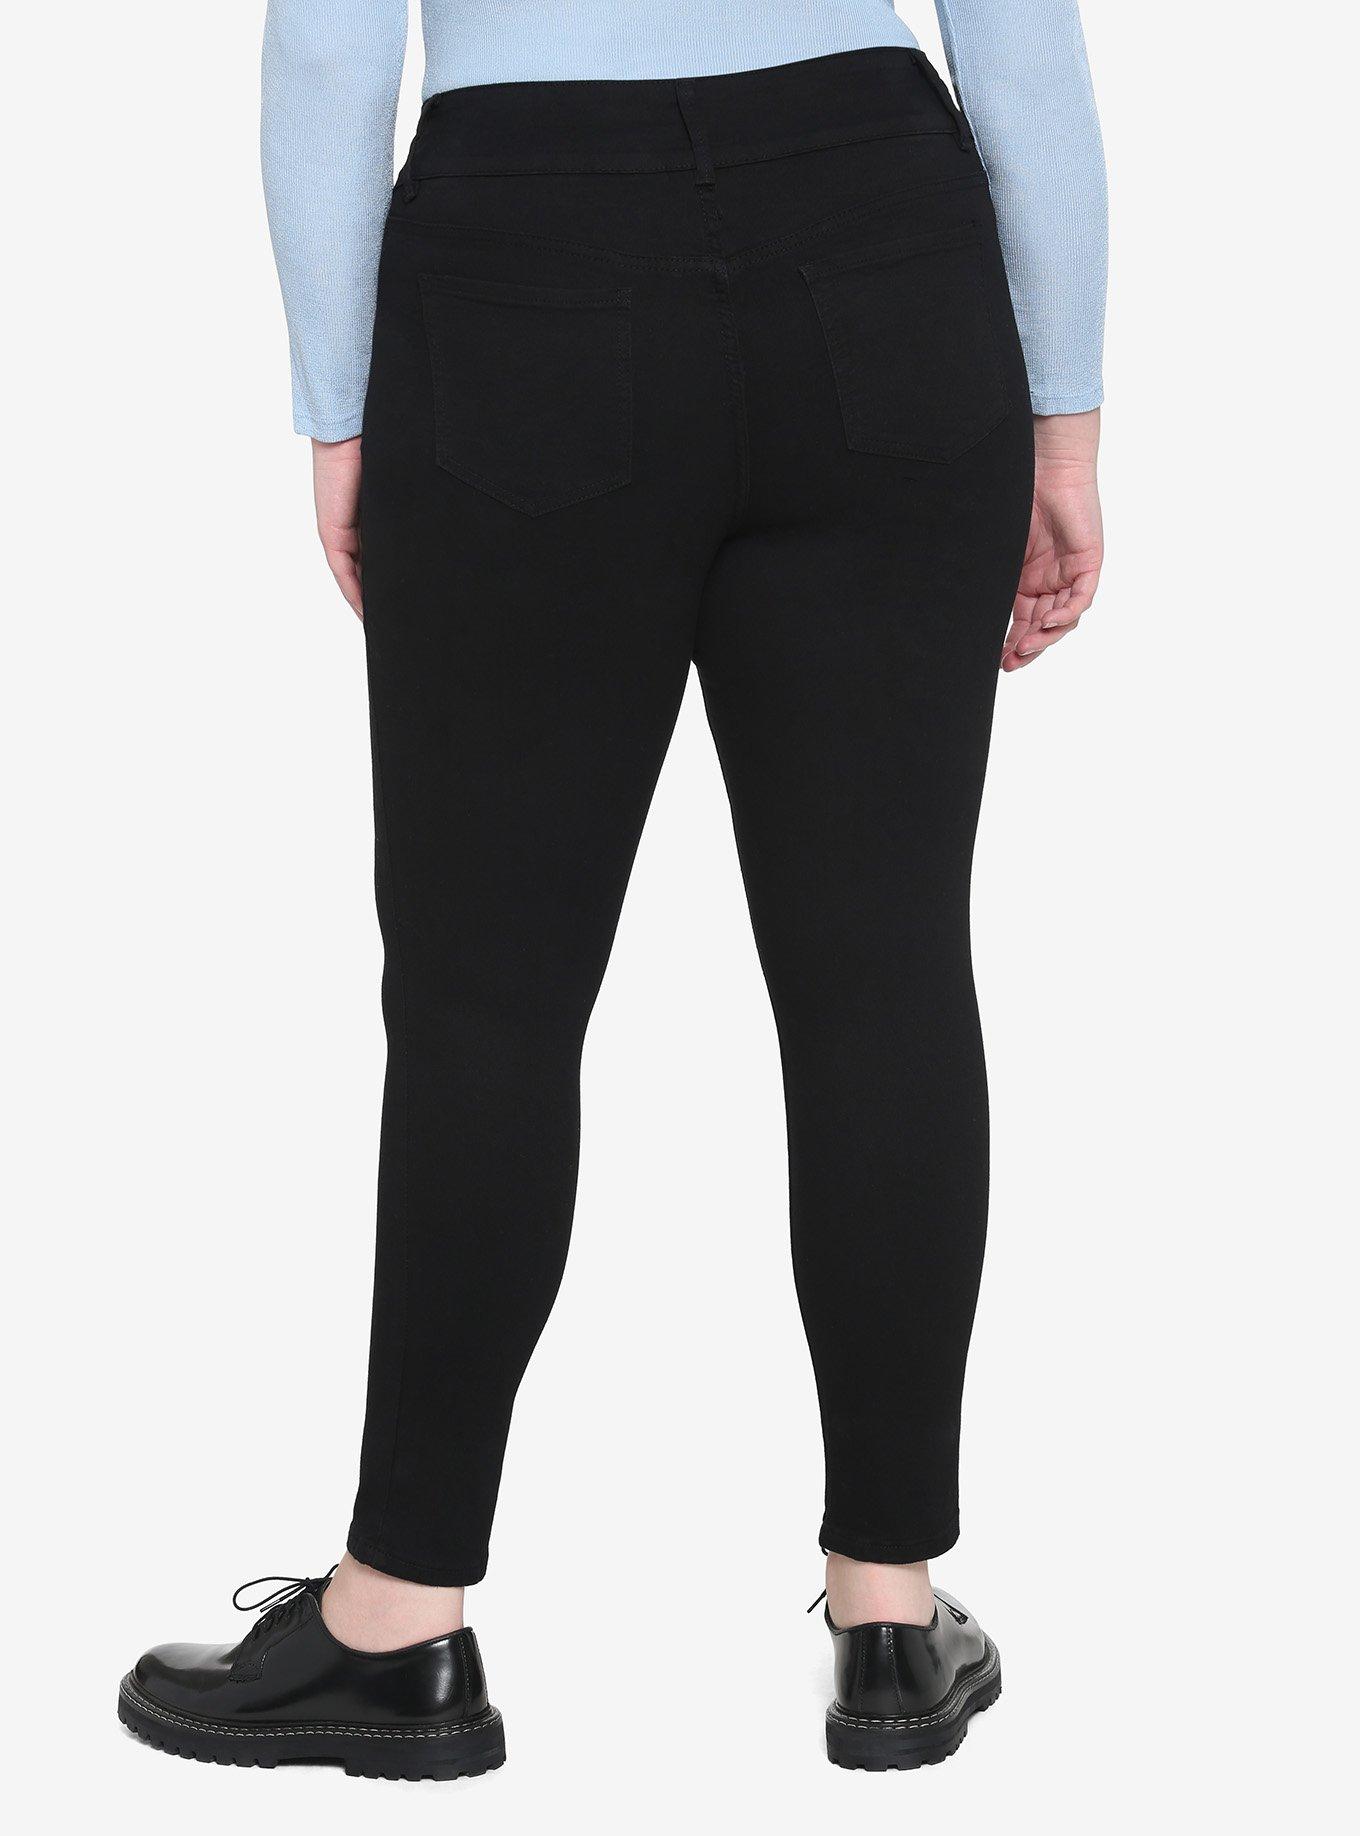 Black 3-Button Skinny Jeans Plus Size, BLACK, alternate